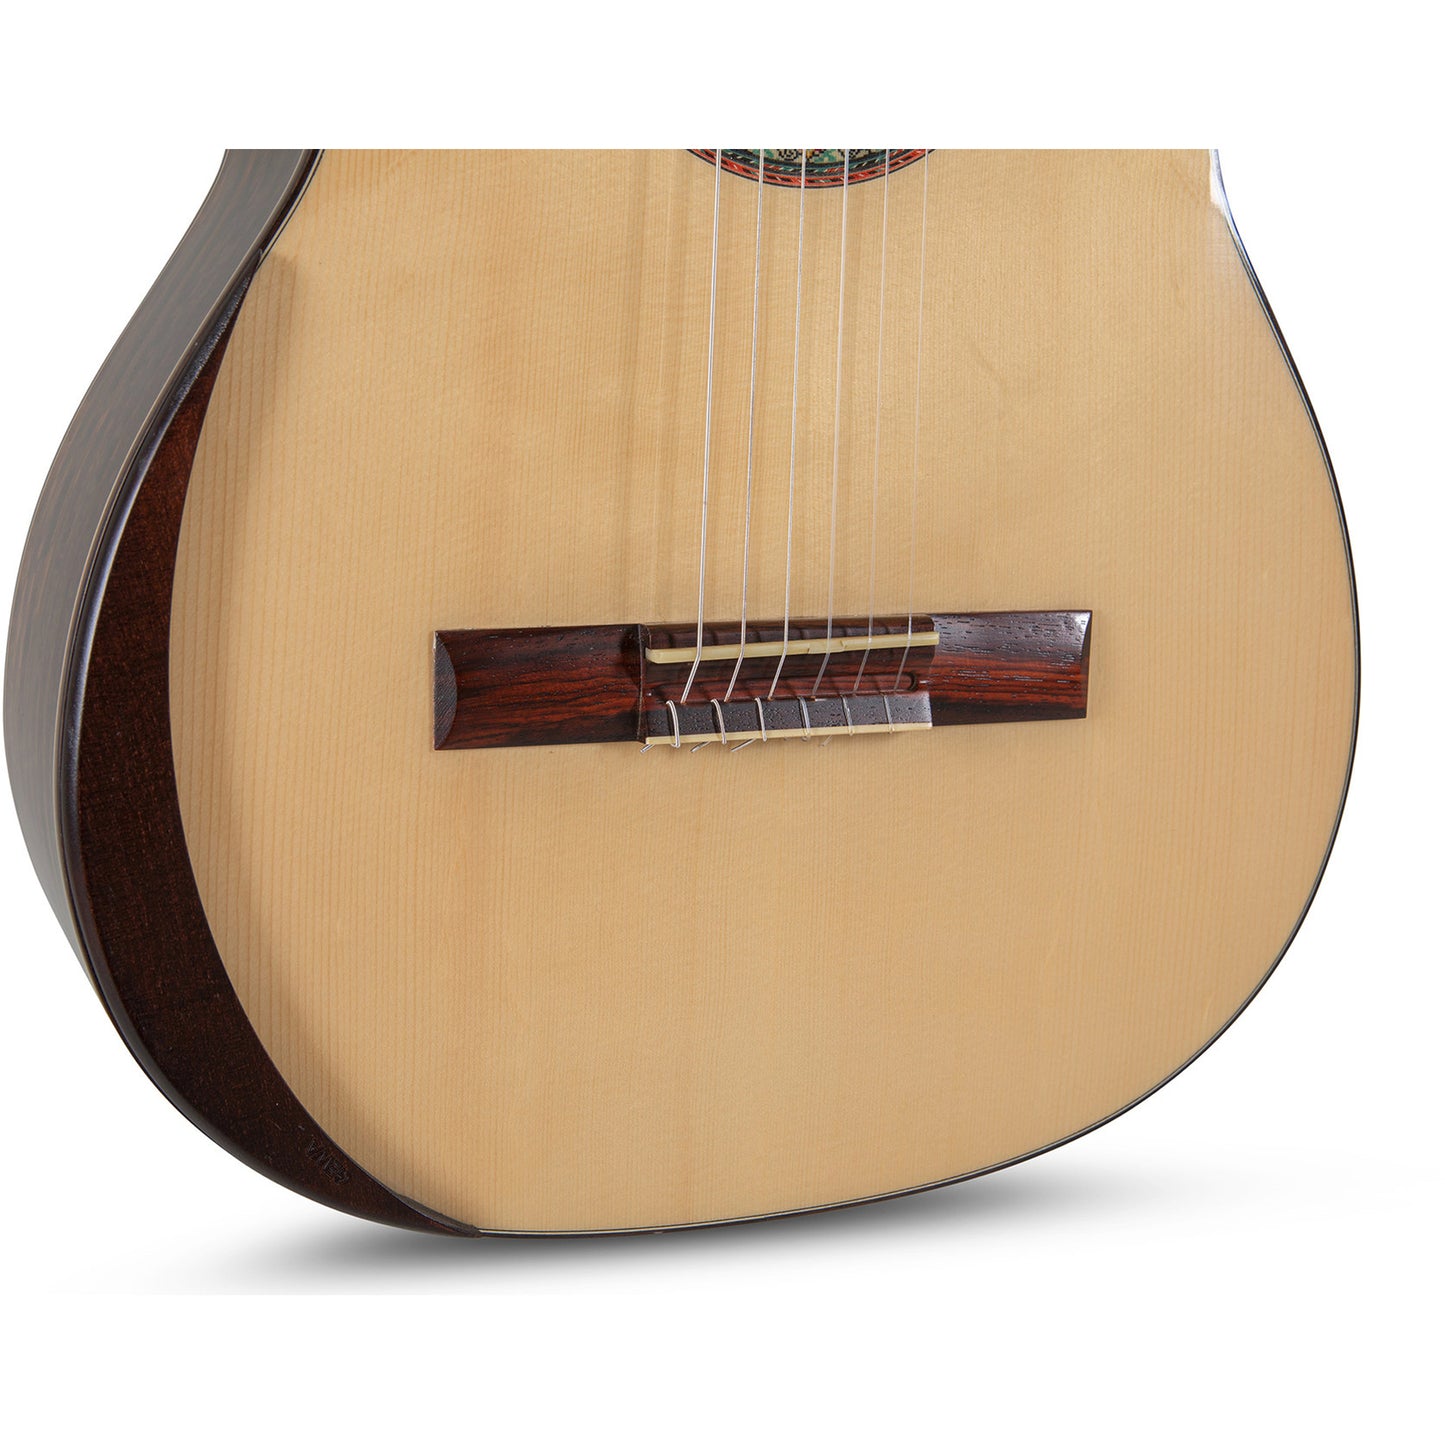 Manuel Rodriguez Superior B-S Eukalyptus Acoustic Guitar - Solid Spruce Top